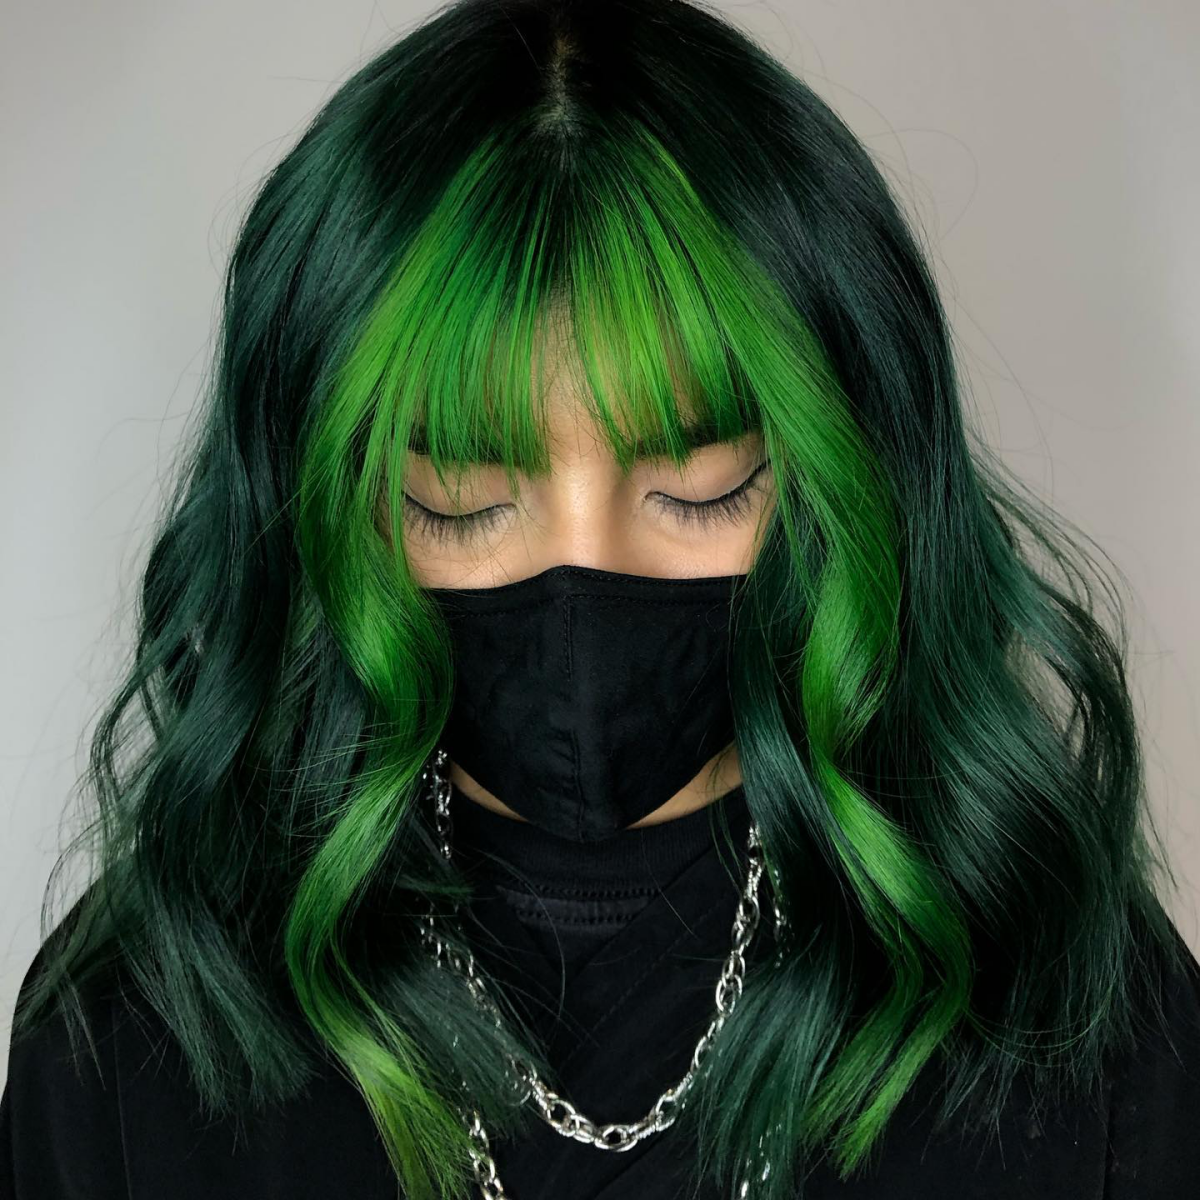 green hair on woman